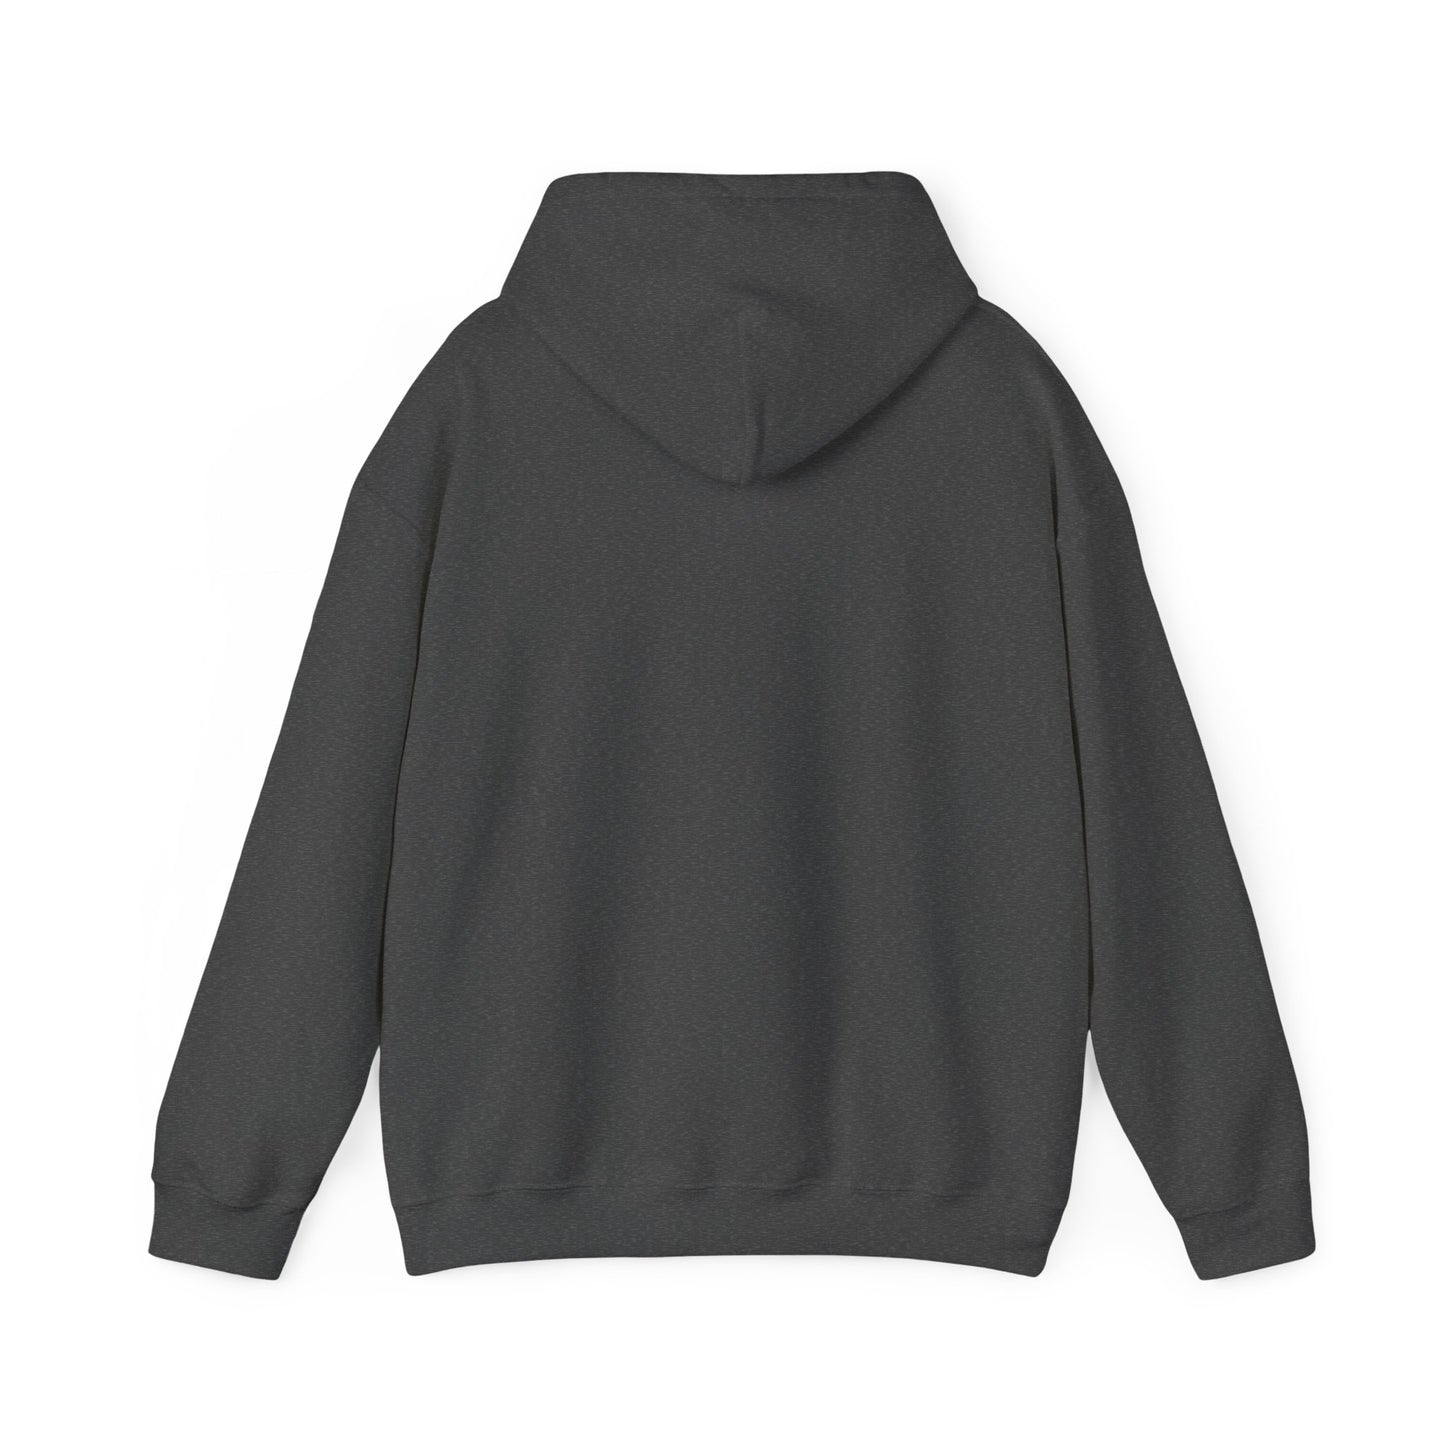 POGO - BORN TO CLOWN - Hooded Sweatshirt